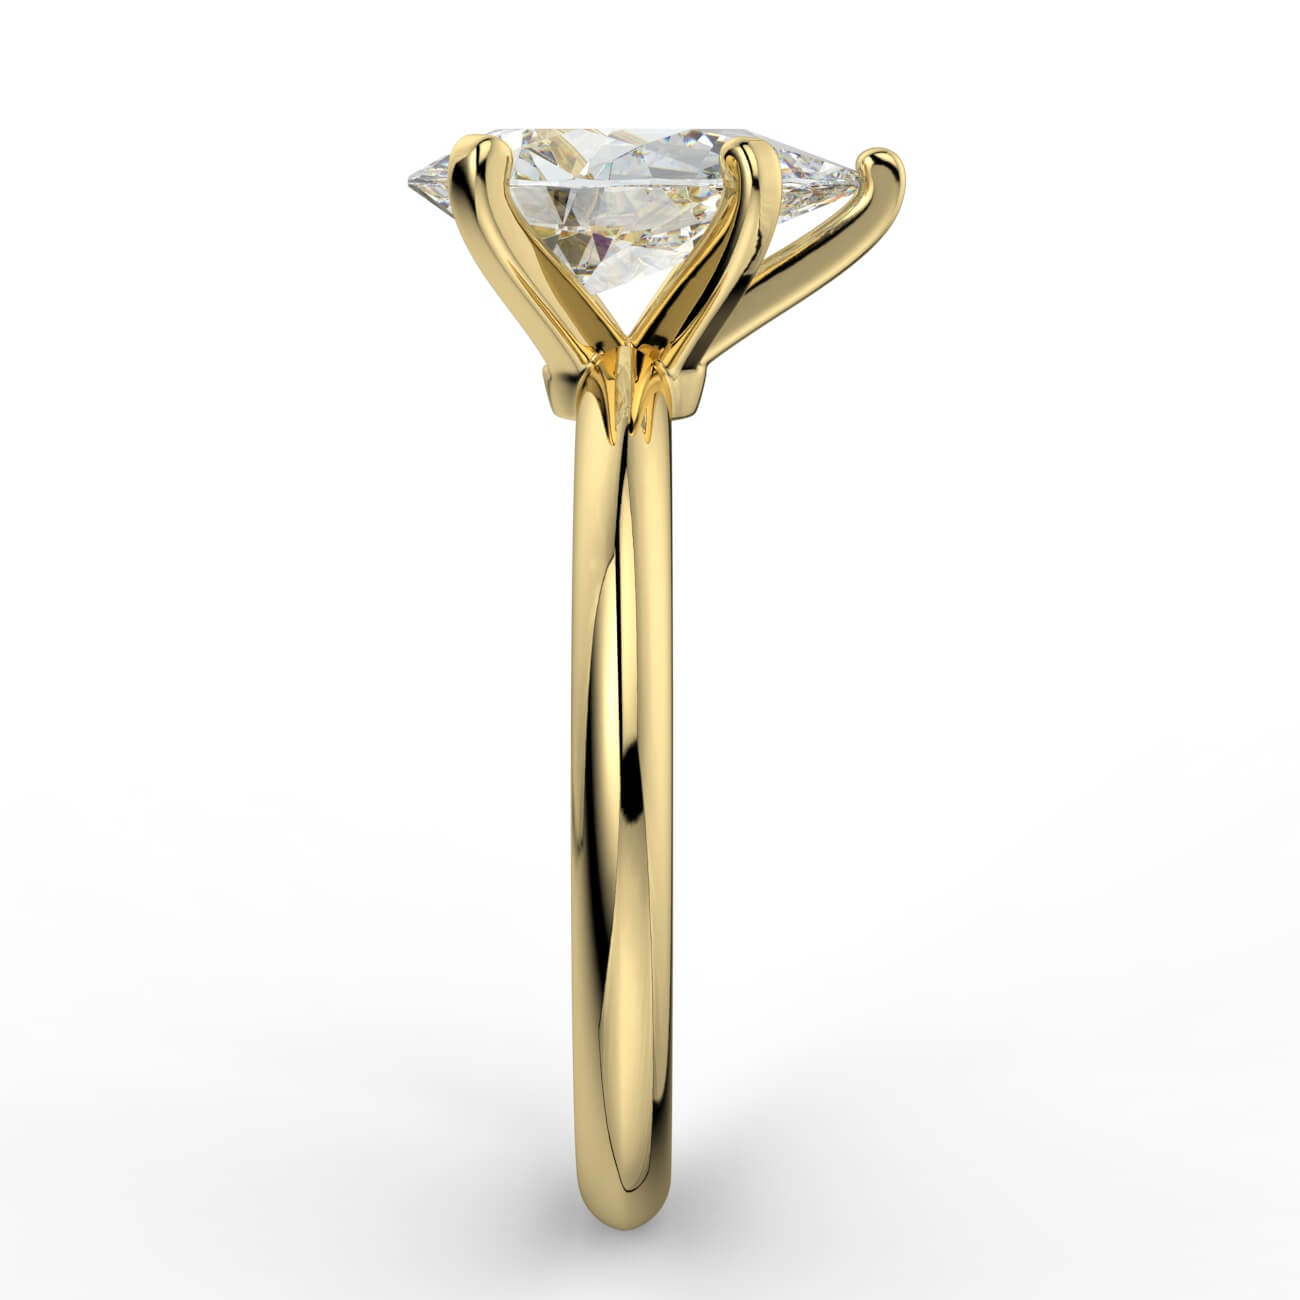 Knife-edge solitaire pear diamond engagement ring in yellow gold – Australian Diamond Network